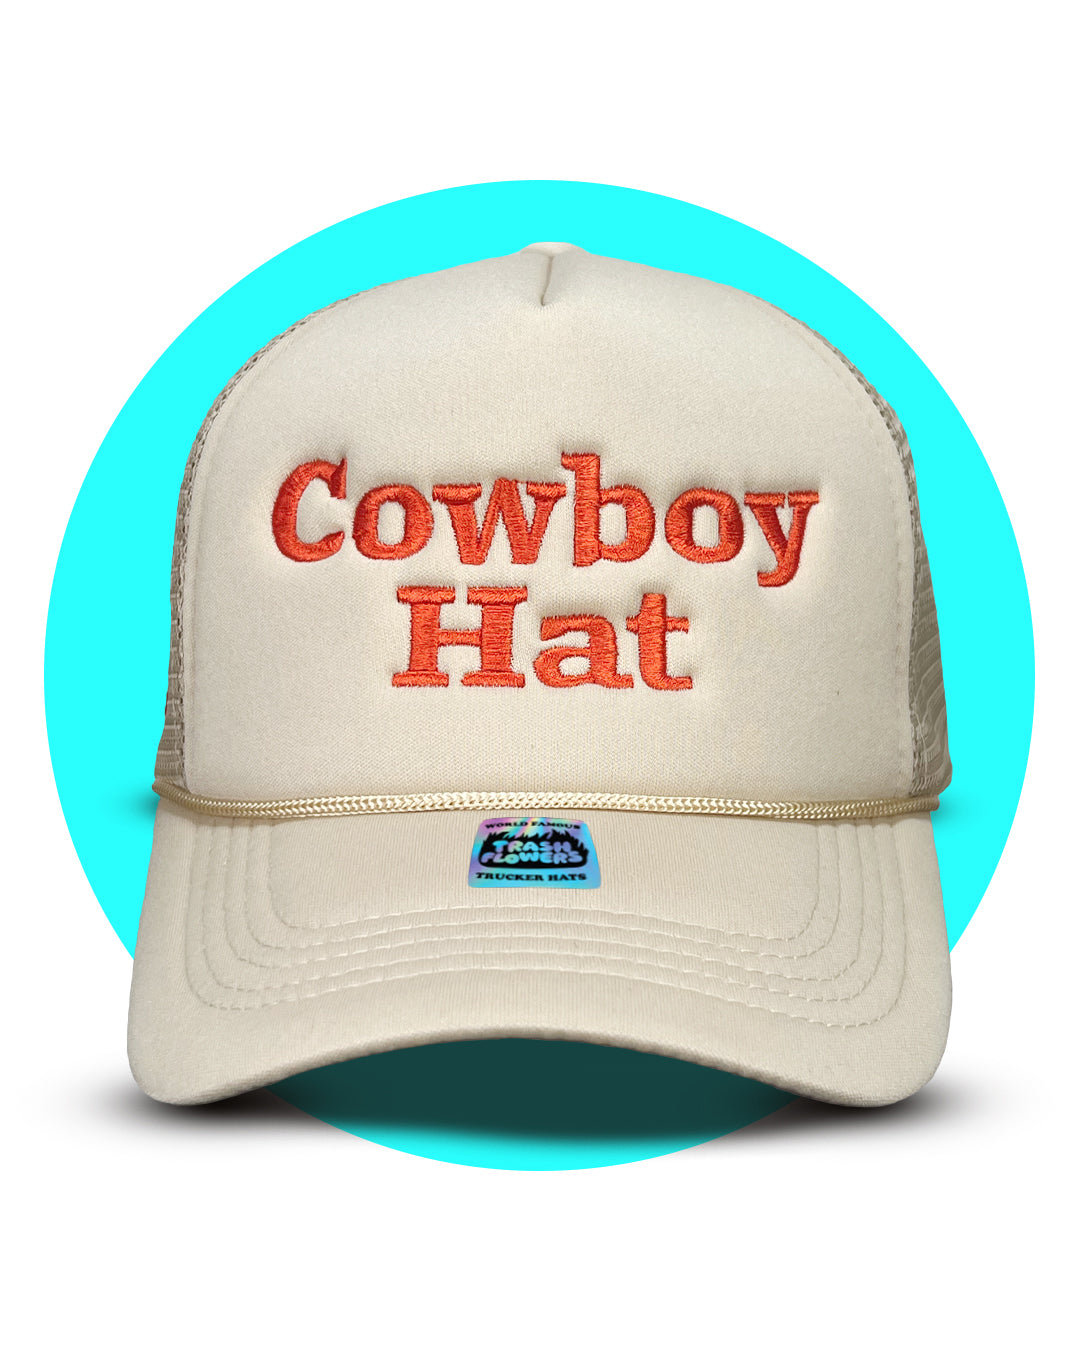 Ltd. Edition Cowboy Hat Trucker Hat